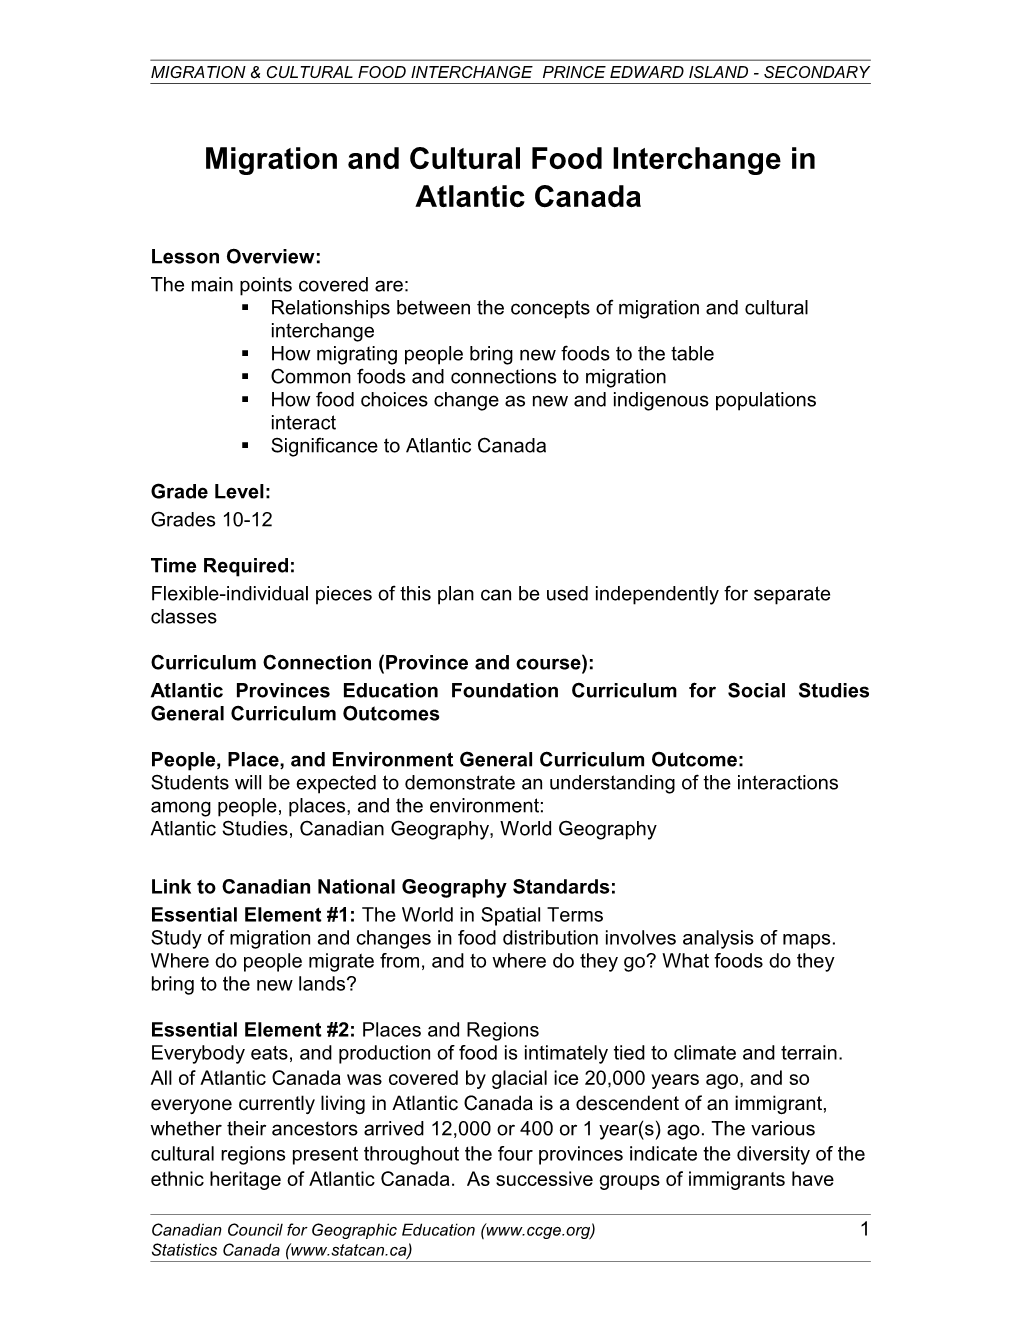 Migration and Cultural Food Interchange in Atlantic Canada